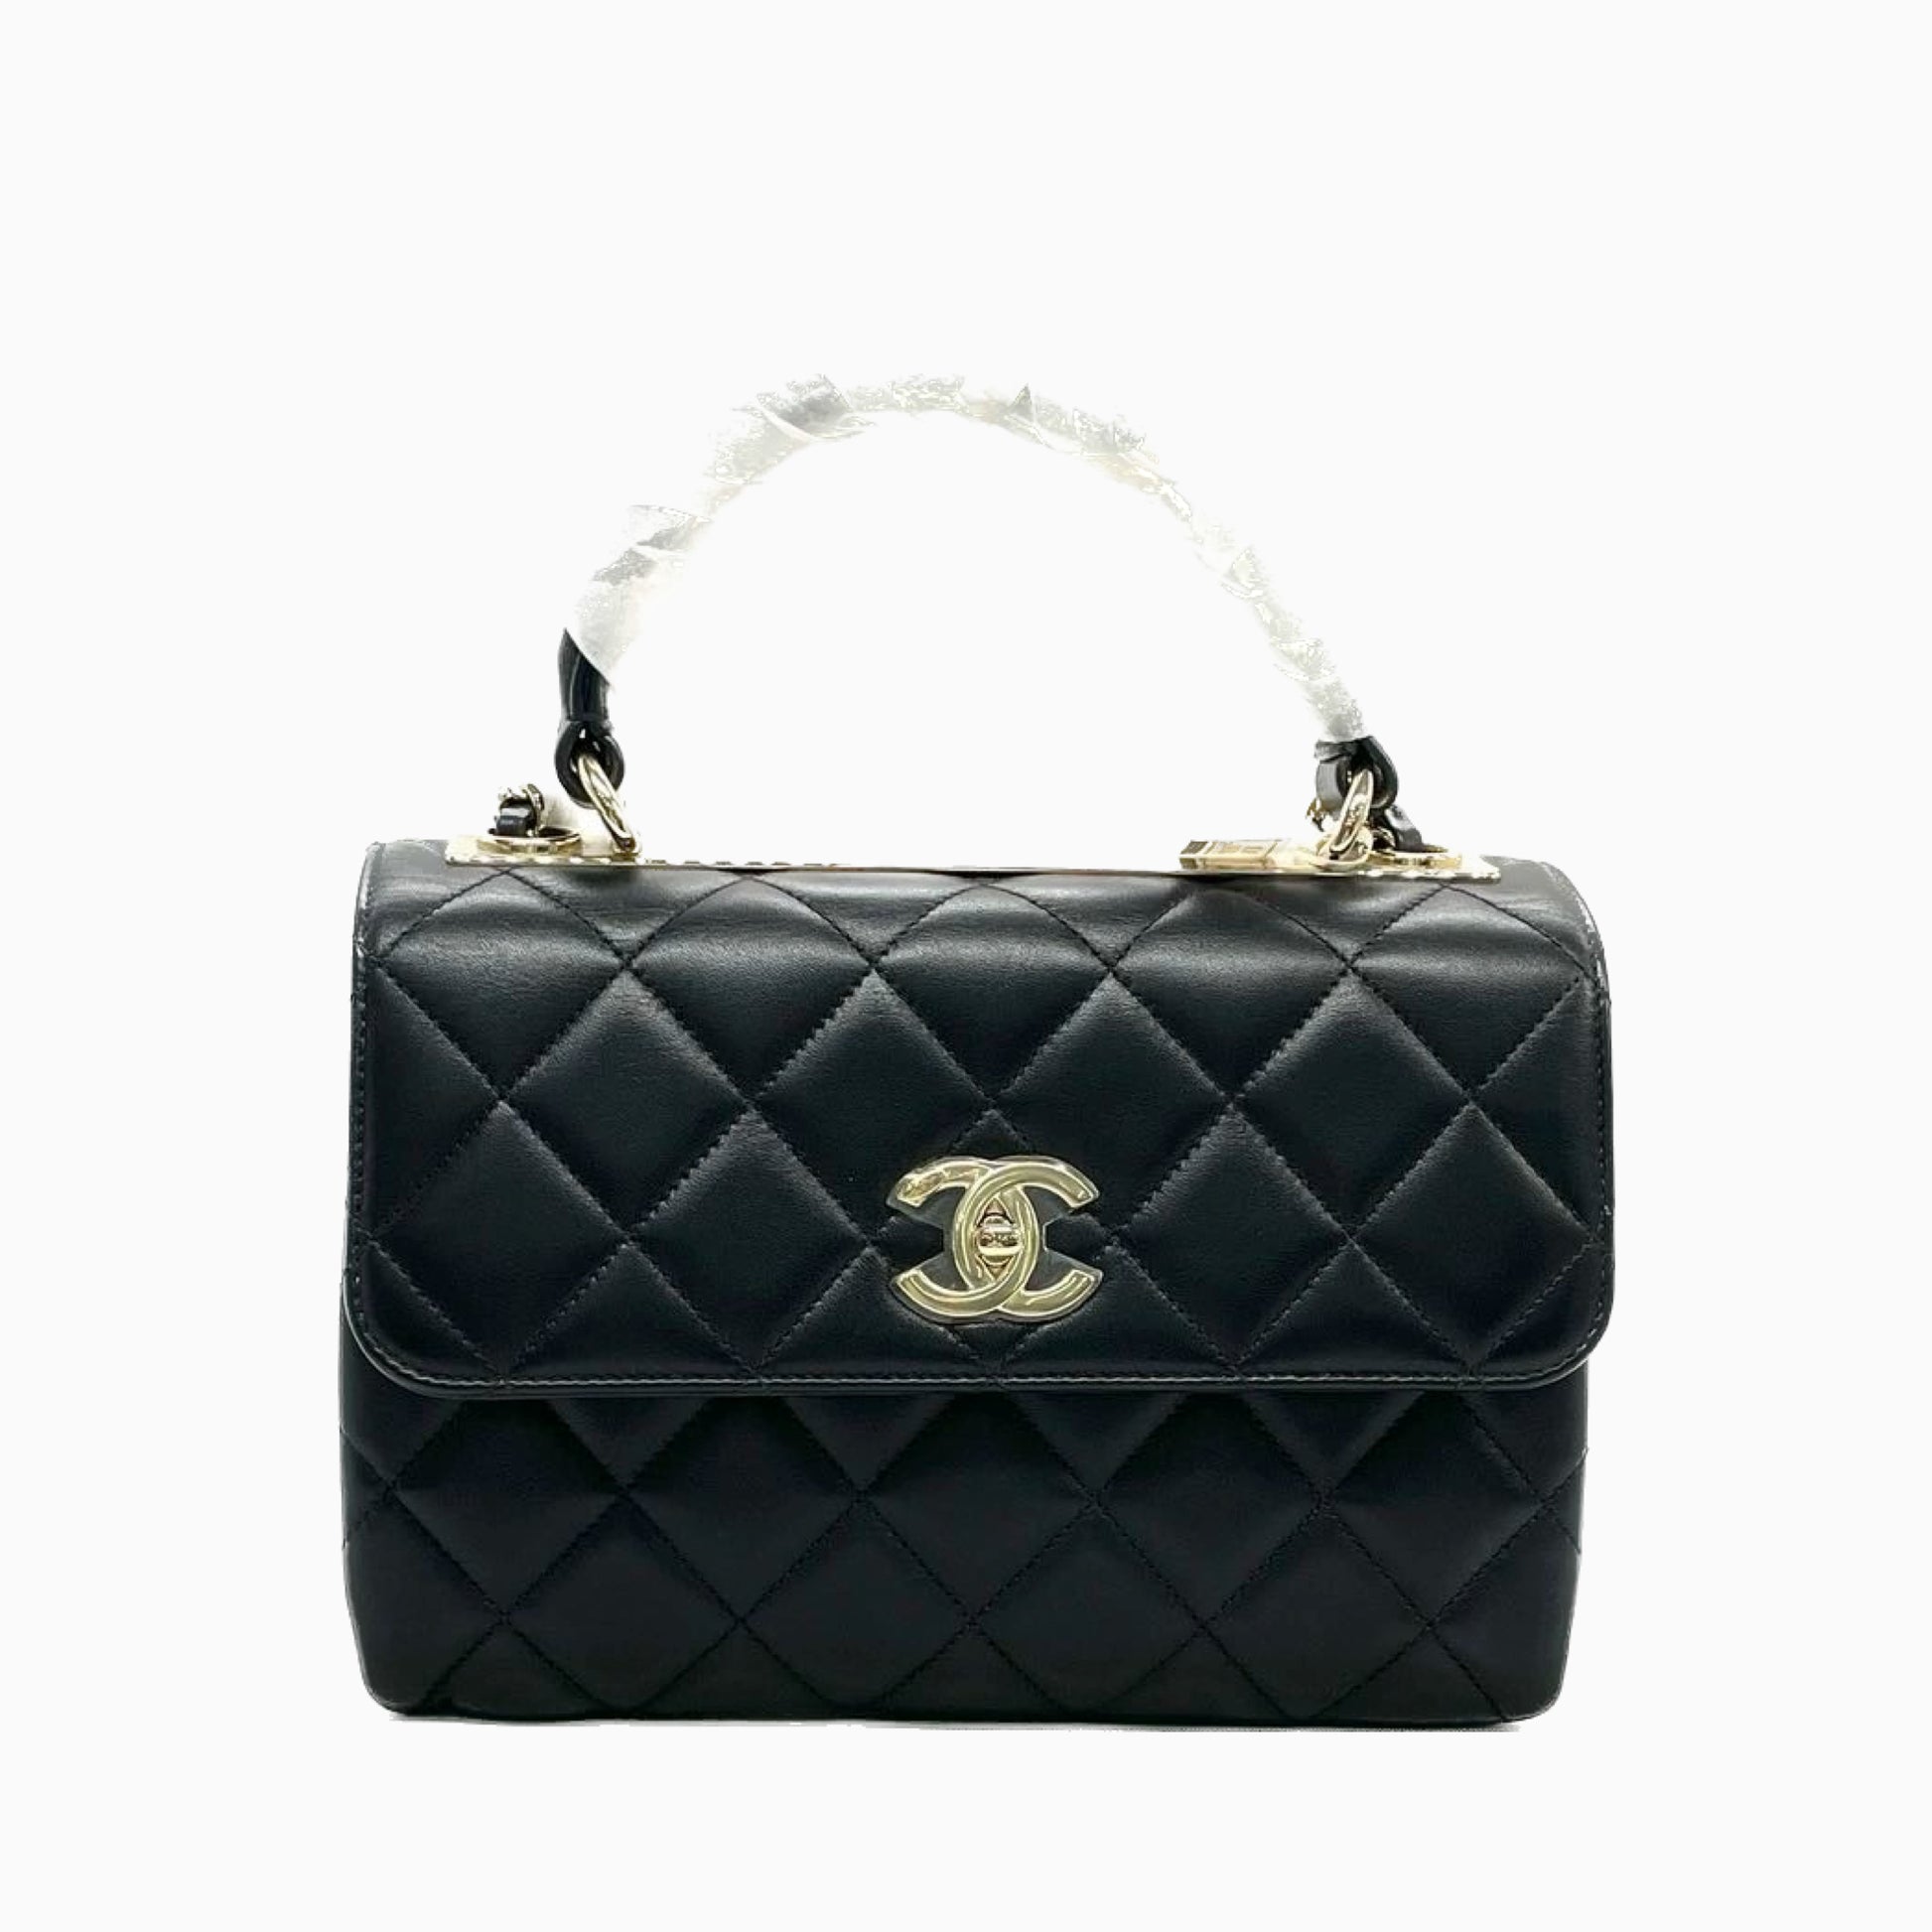 Sold Chanel Trendy CC Small black